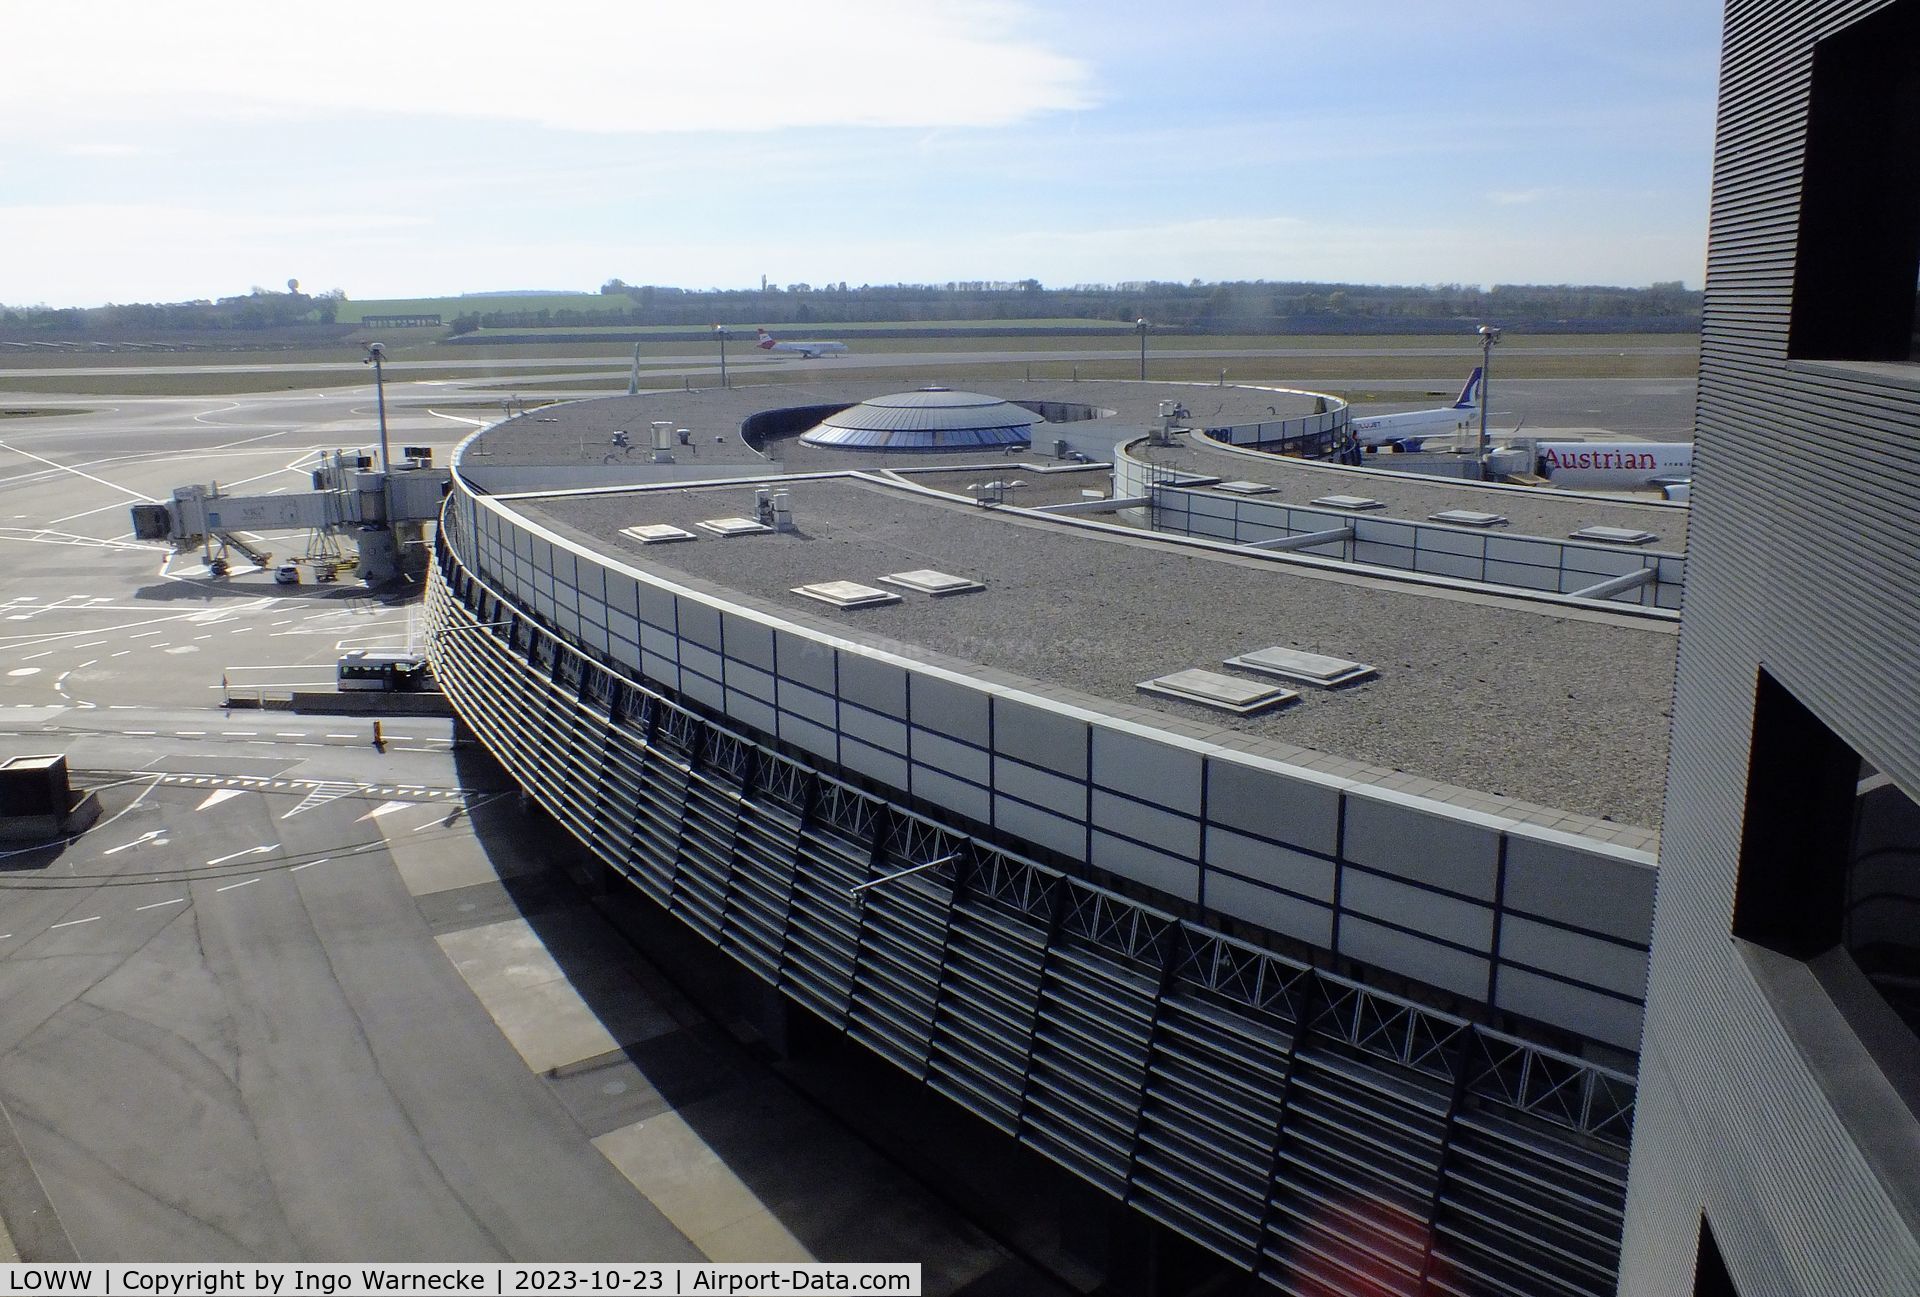 Vienna International Airport, Vienna Austria (LOWW) - gates building D at Wien airport